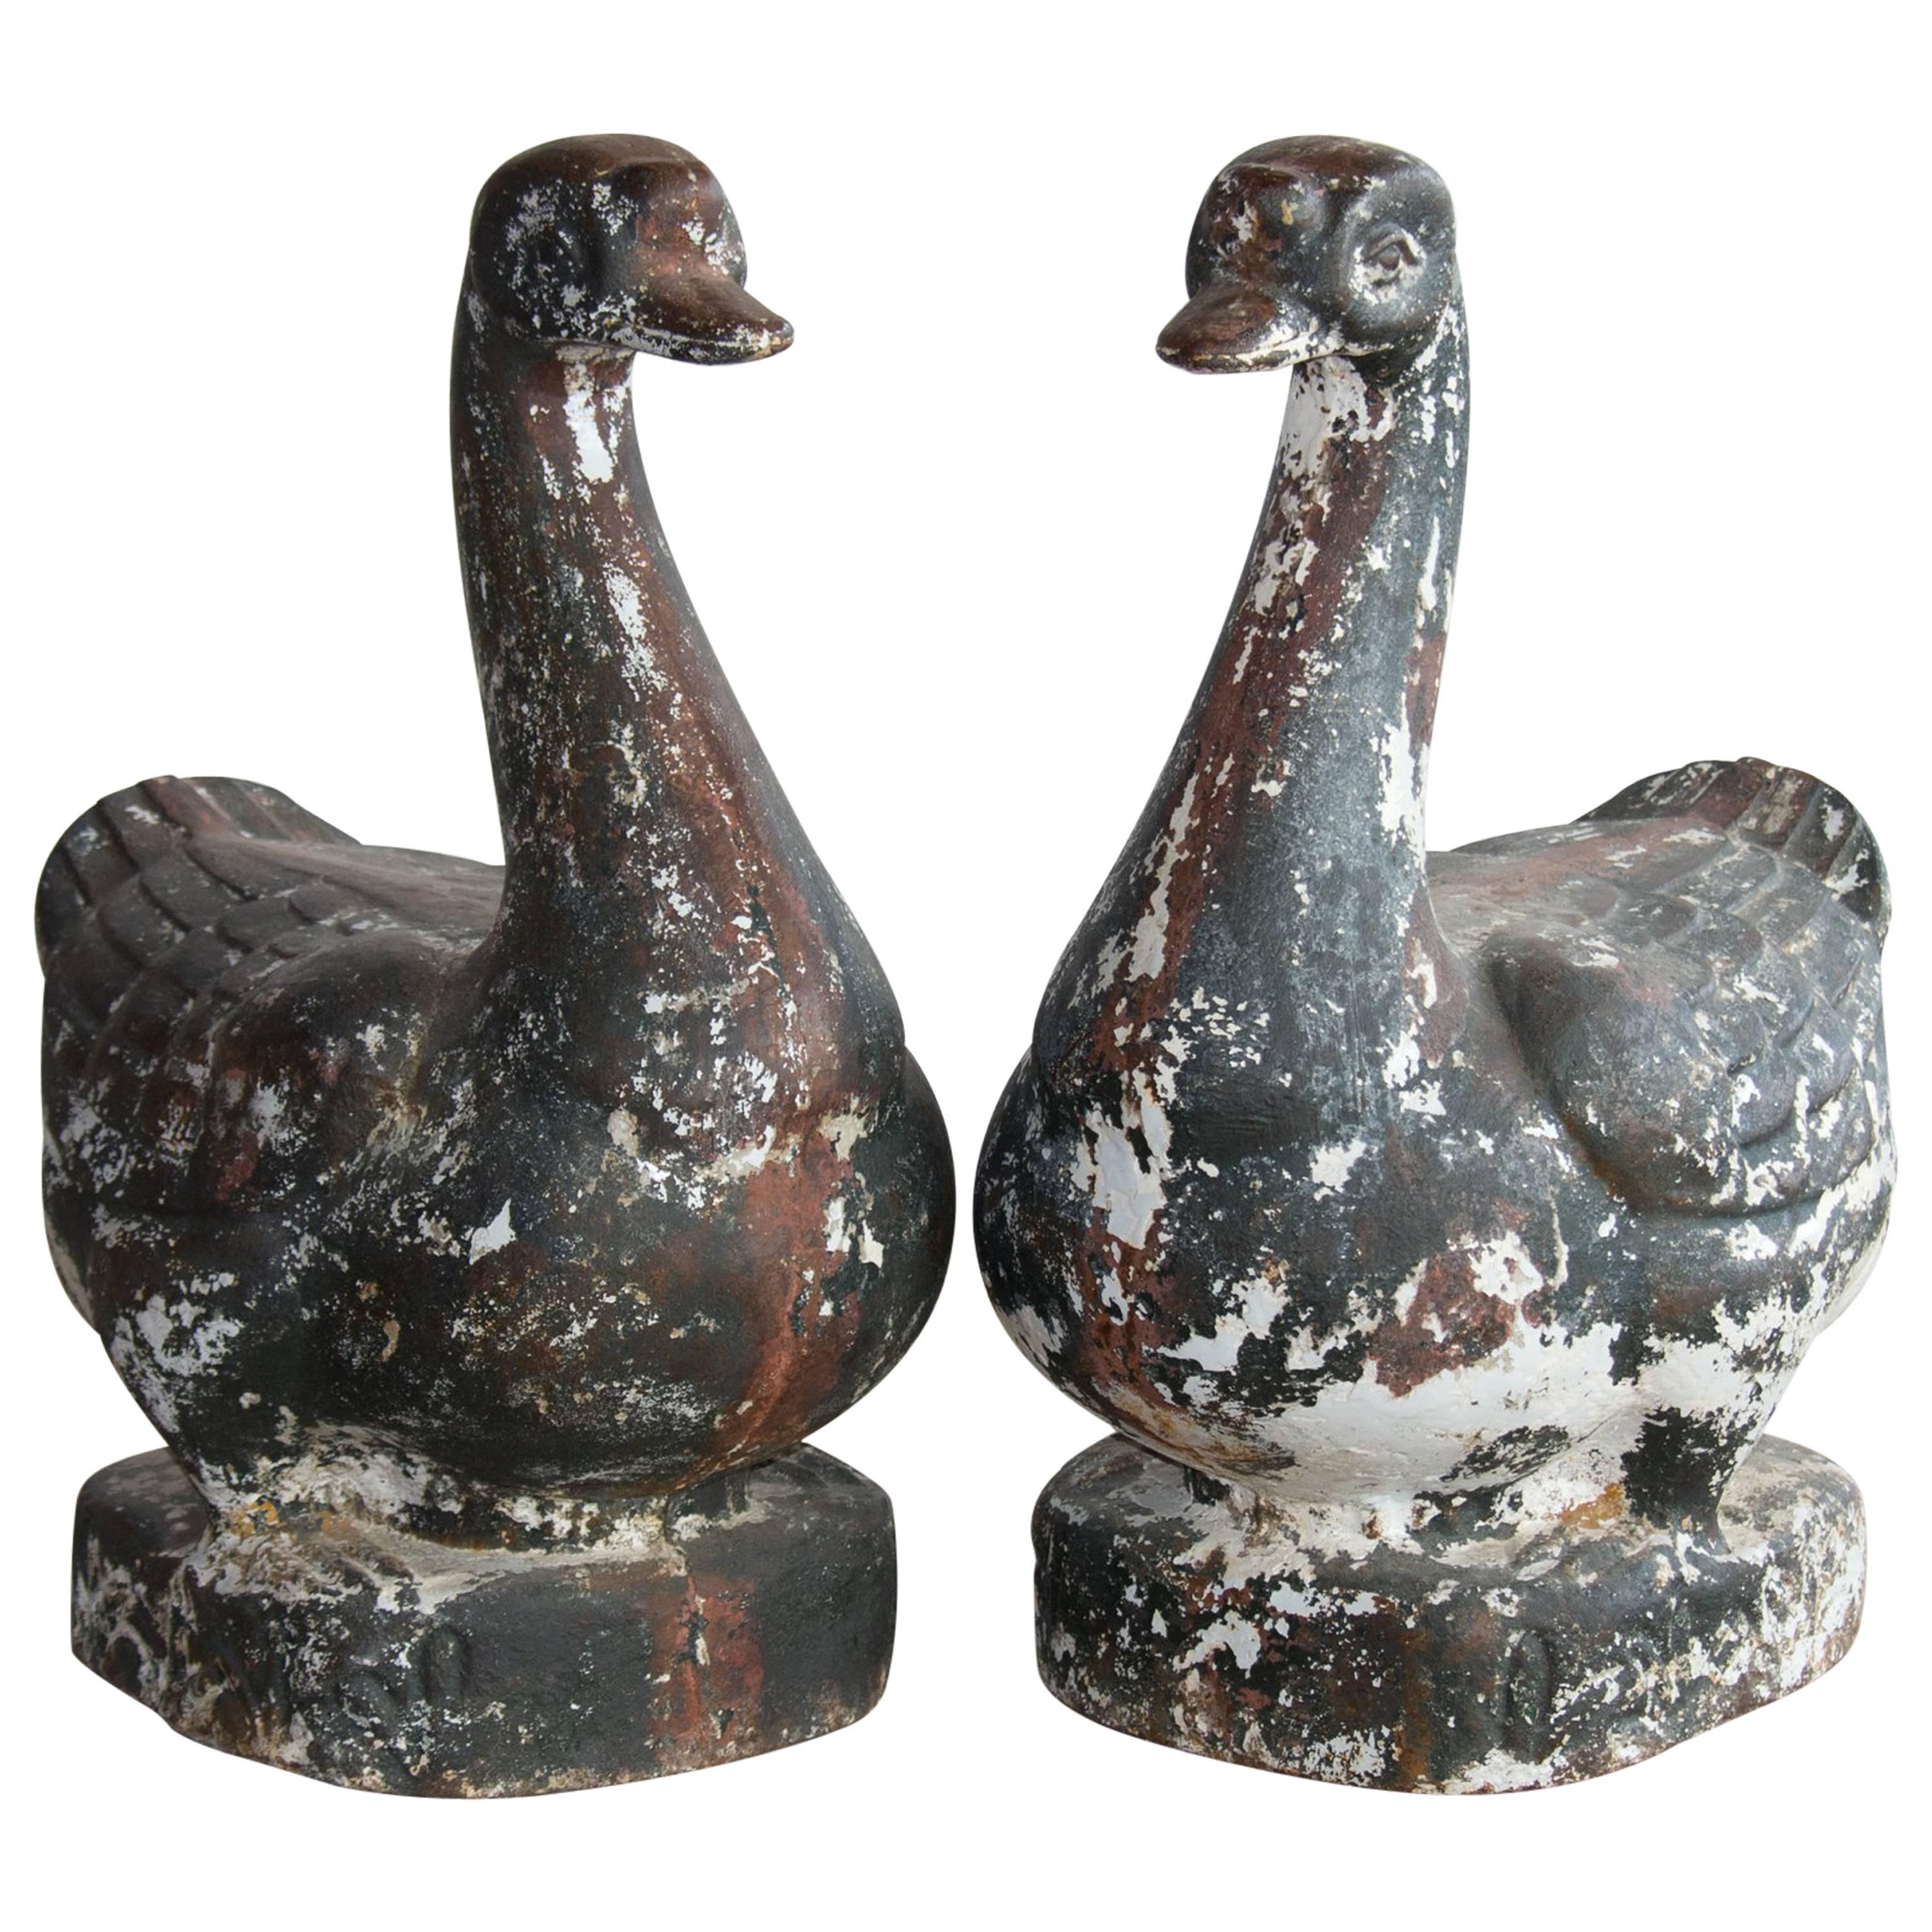 Pair of Vintage Cast Iron English Ducks